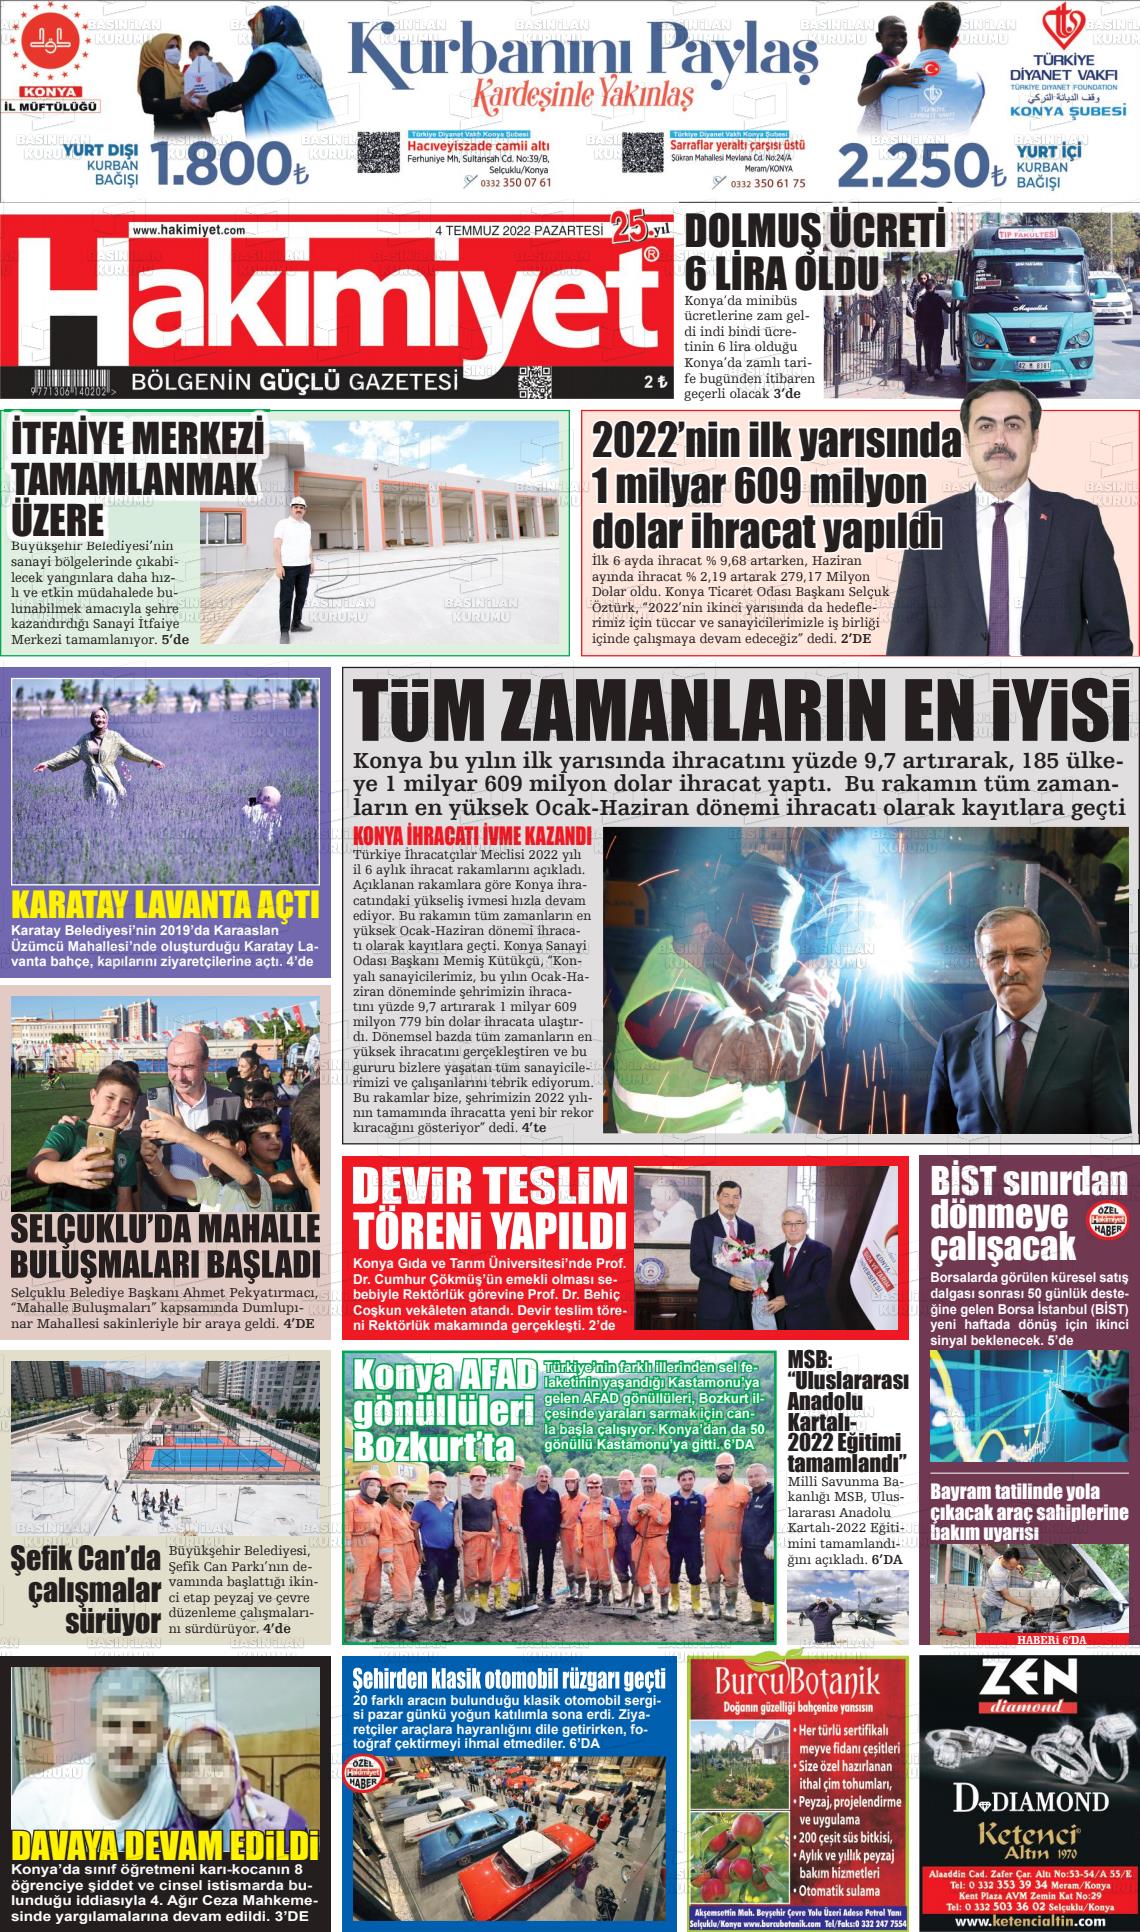 04 Temmuz 2022 Konya Hakimiyet Gazete Manşeti